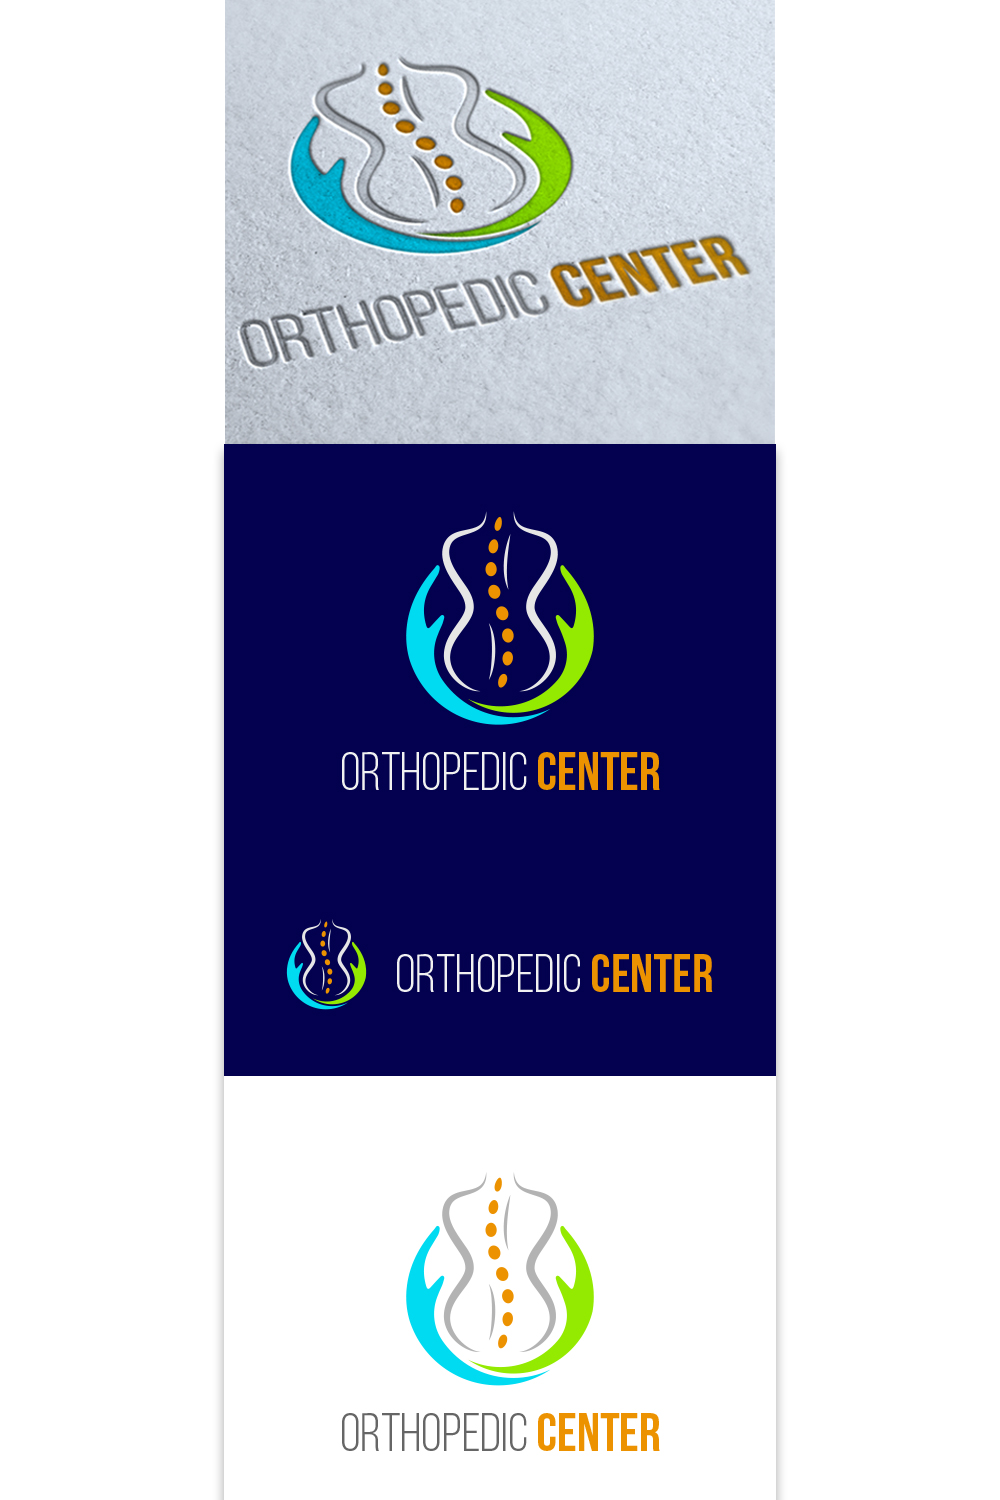 Orthopedic Center Chiropractic Doctor Clinic Logo pinterest image.